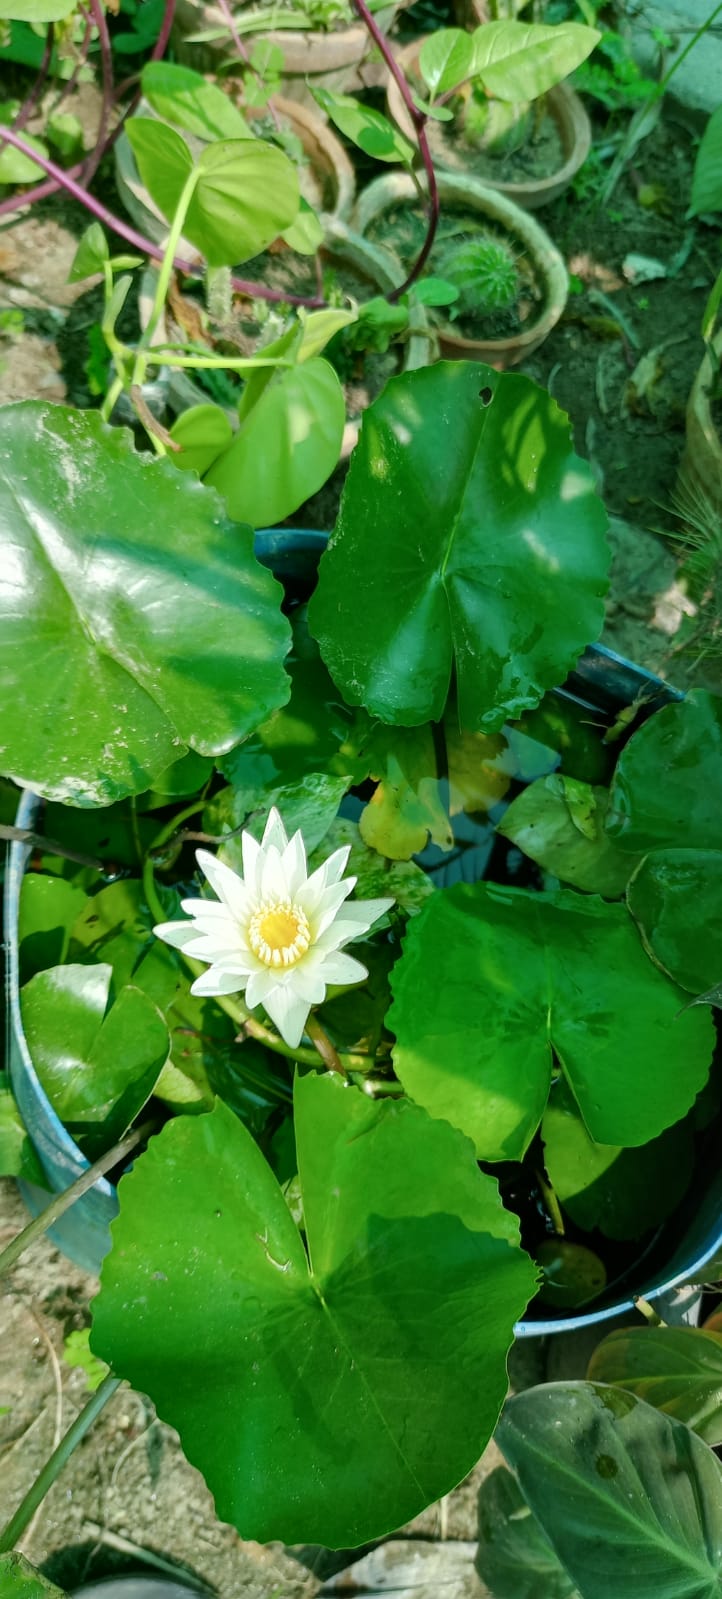 Buy Lotus Plant